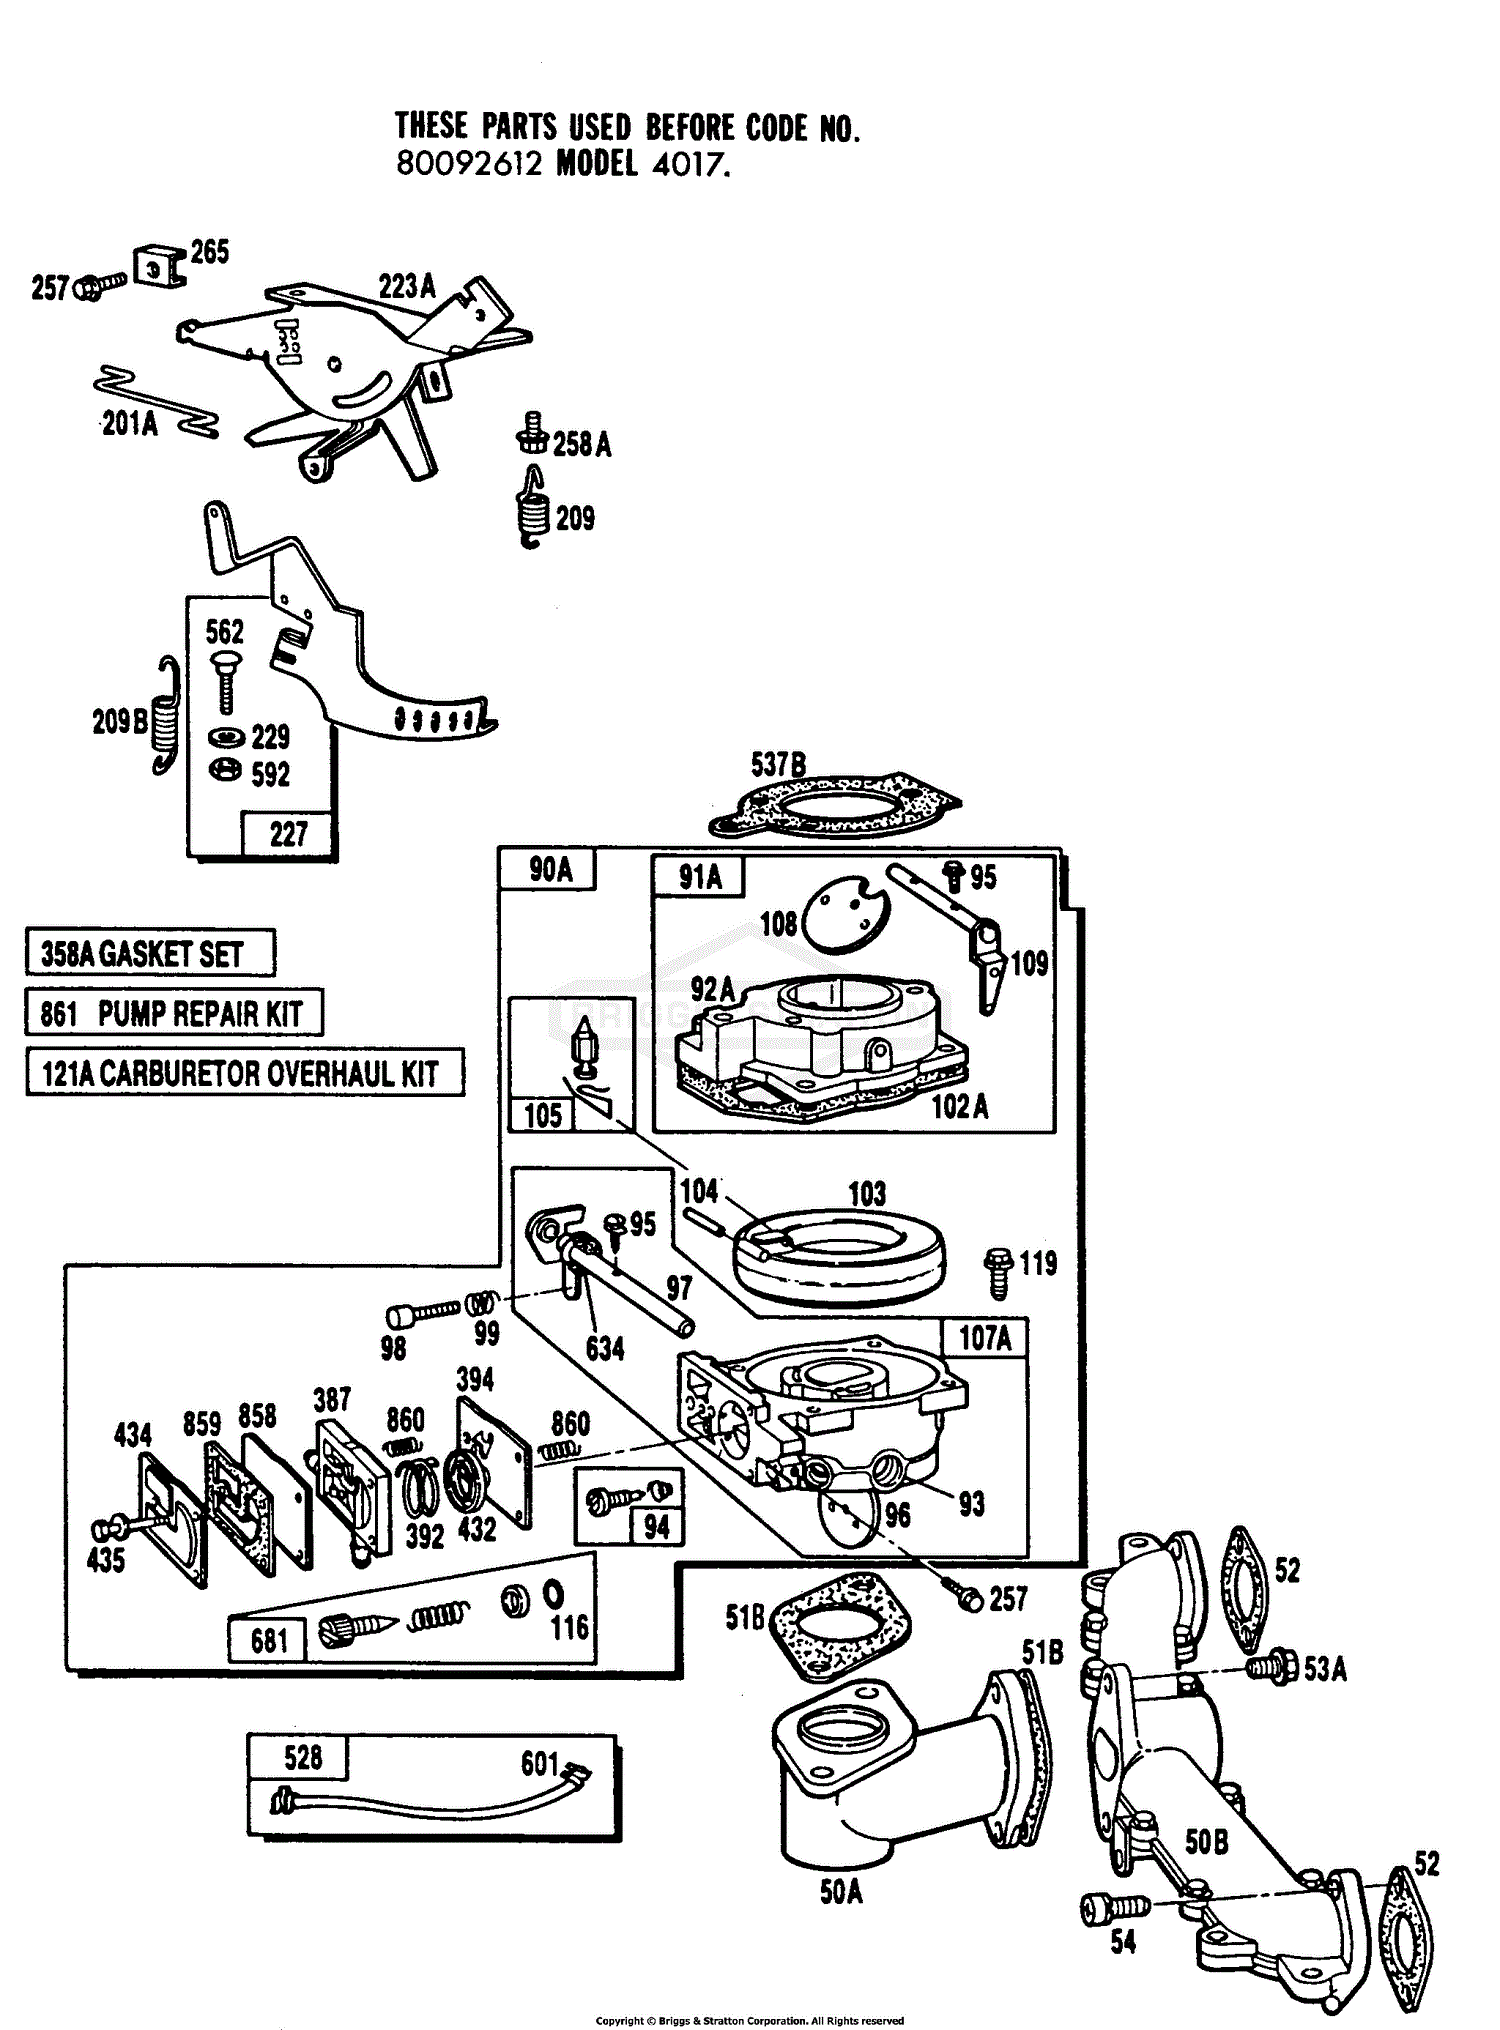 Briggs & Stratton Carburetor Carb Rebuild Kit Fits Models 402707-0160 to 1240 